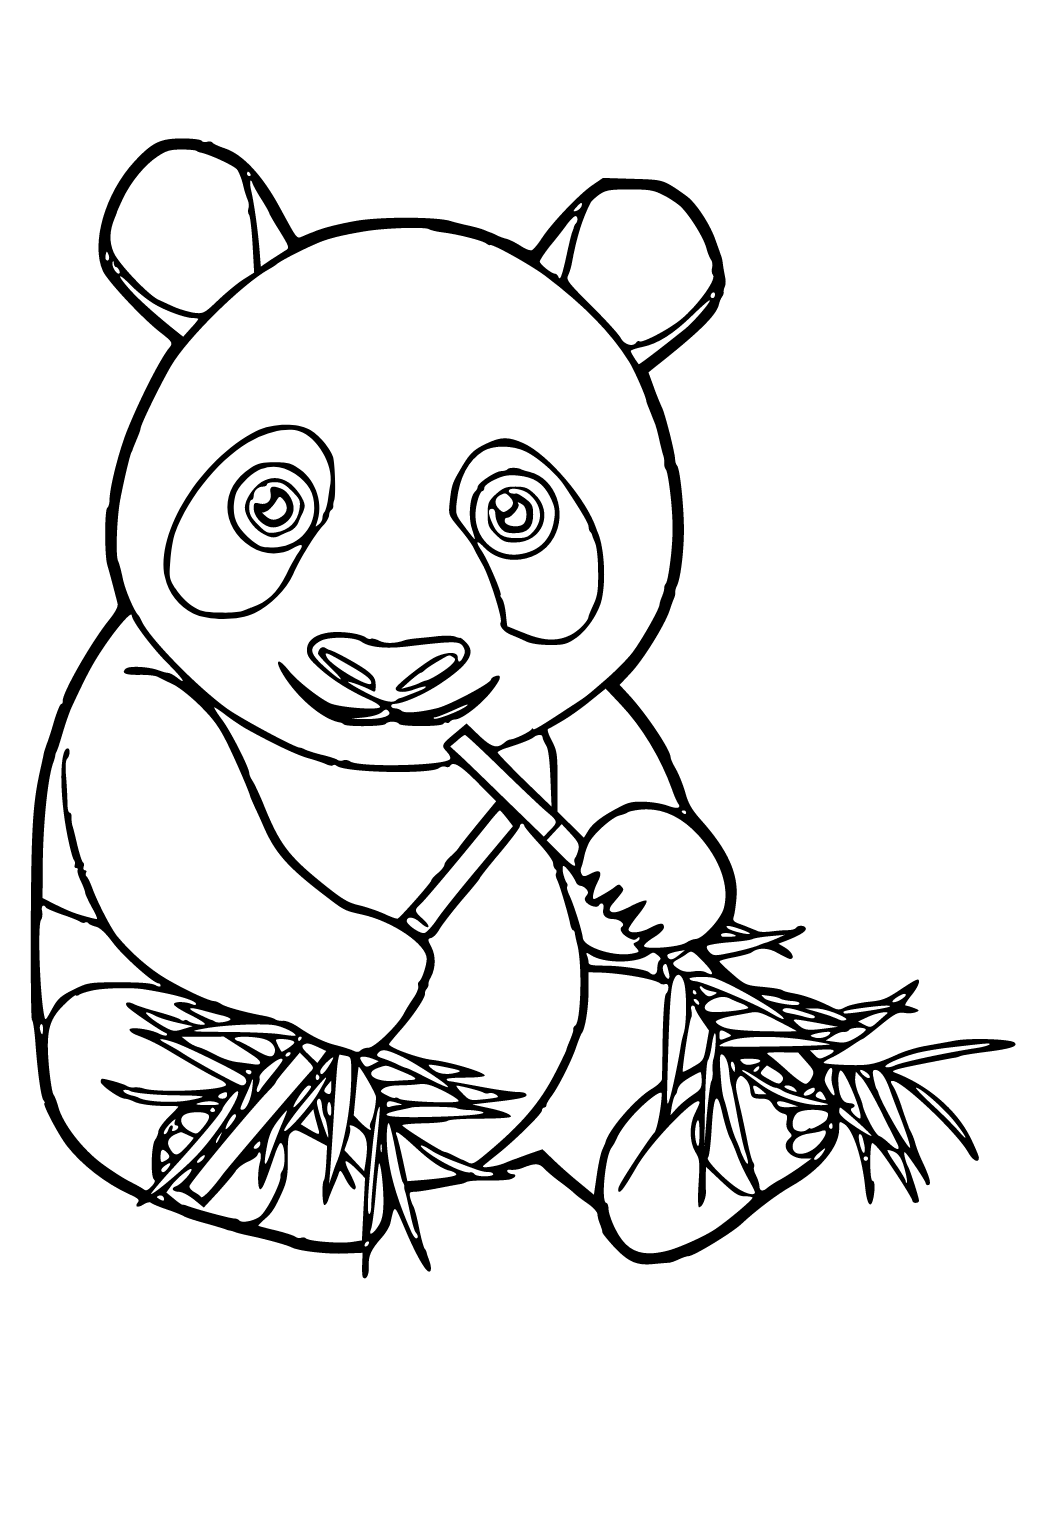 Panda fofo, alegre, legal, fácil de colorir, desenho infantil